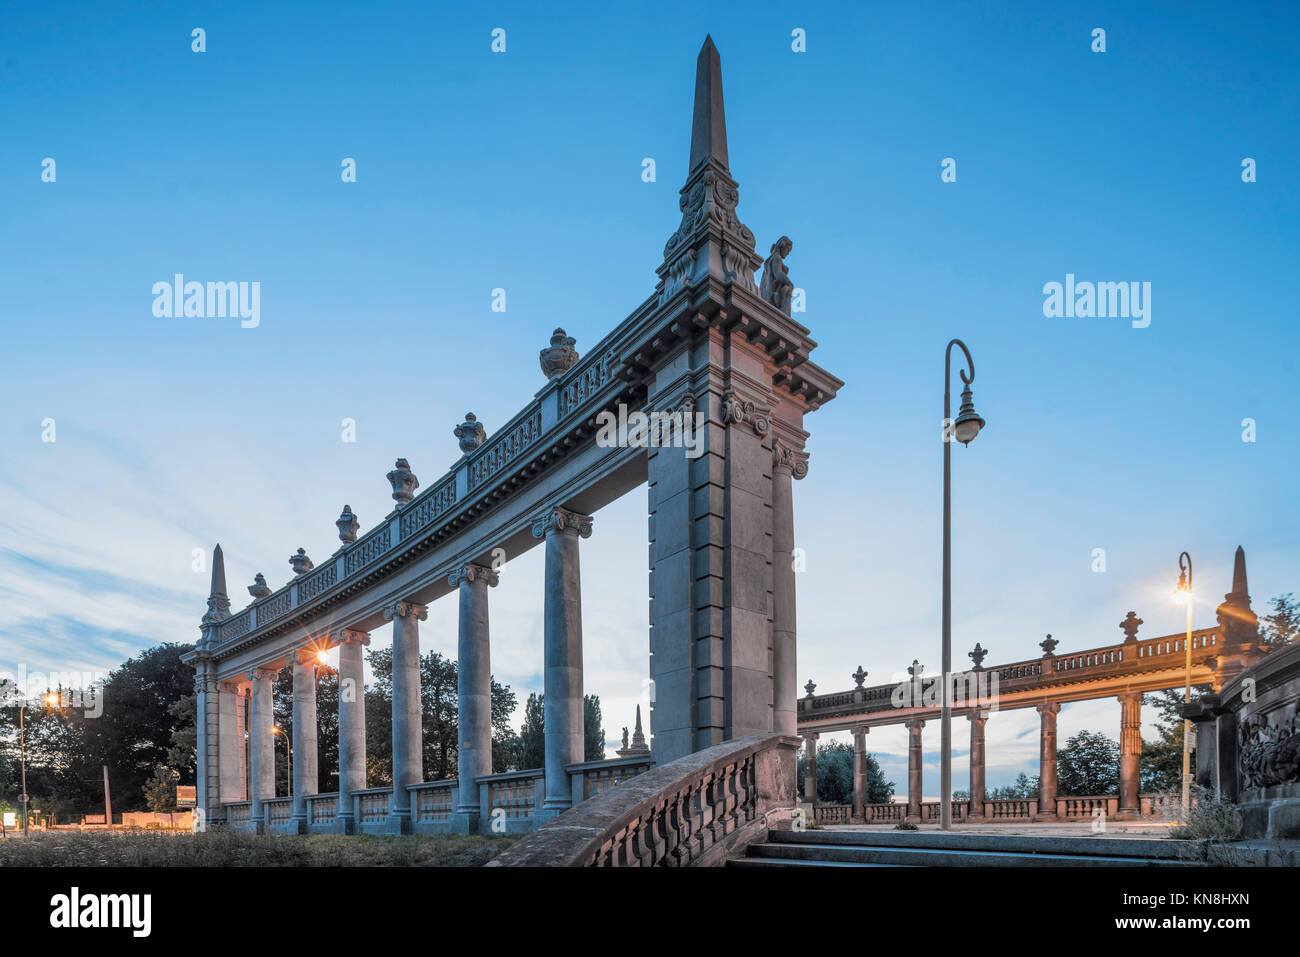 Glienicker bridge, Kolonades, Potsdam, Germany Stock Photo